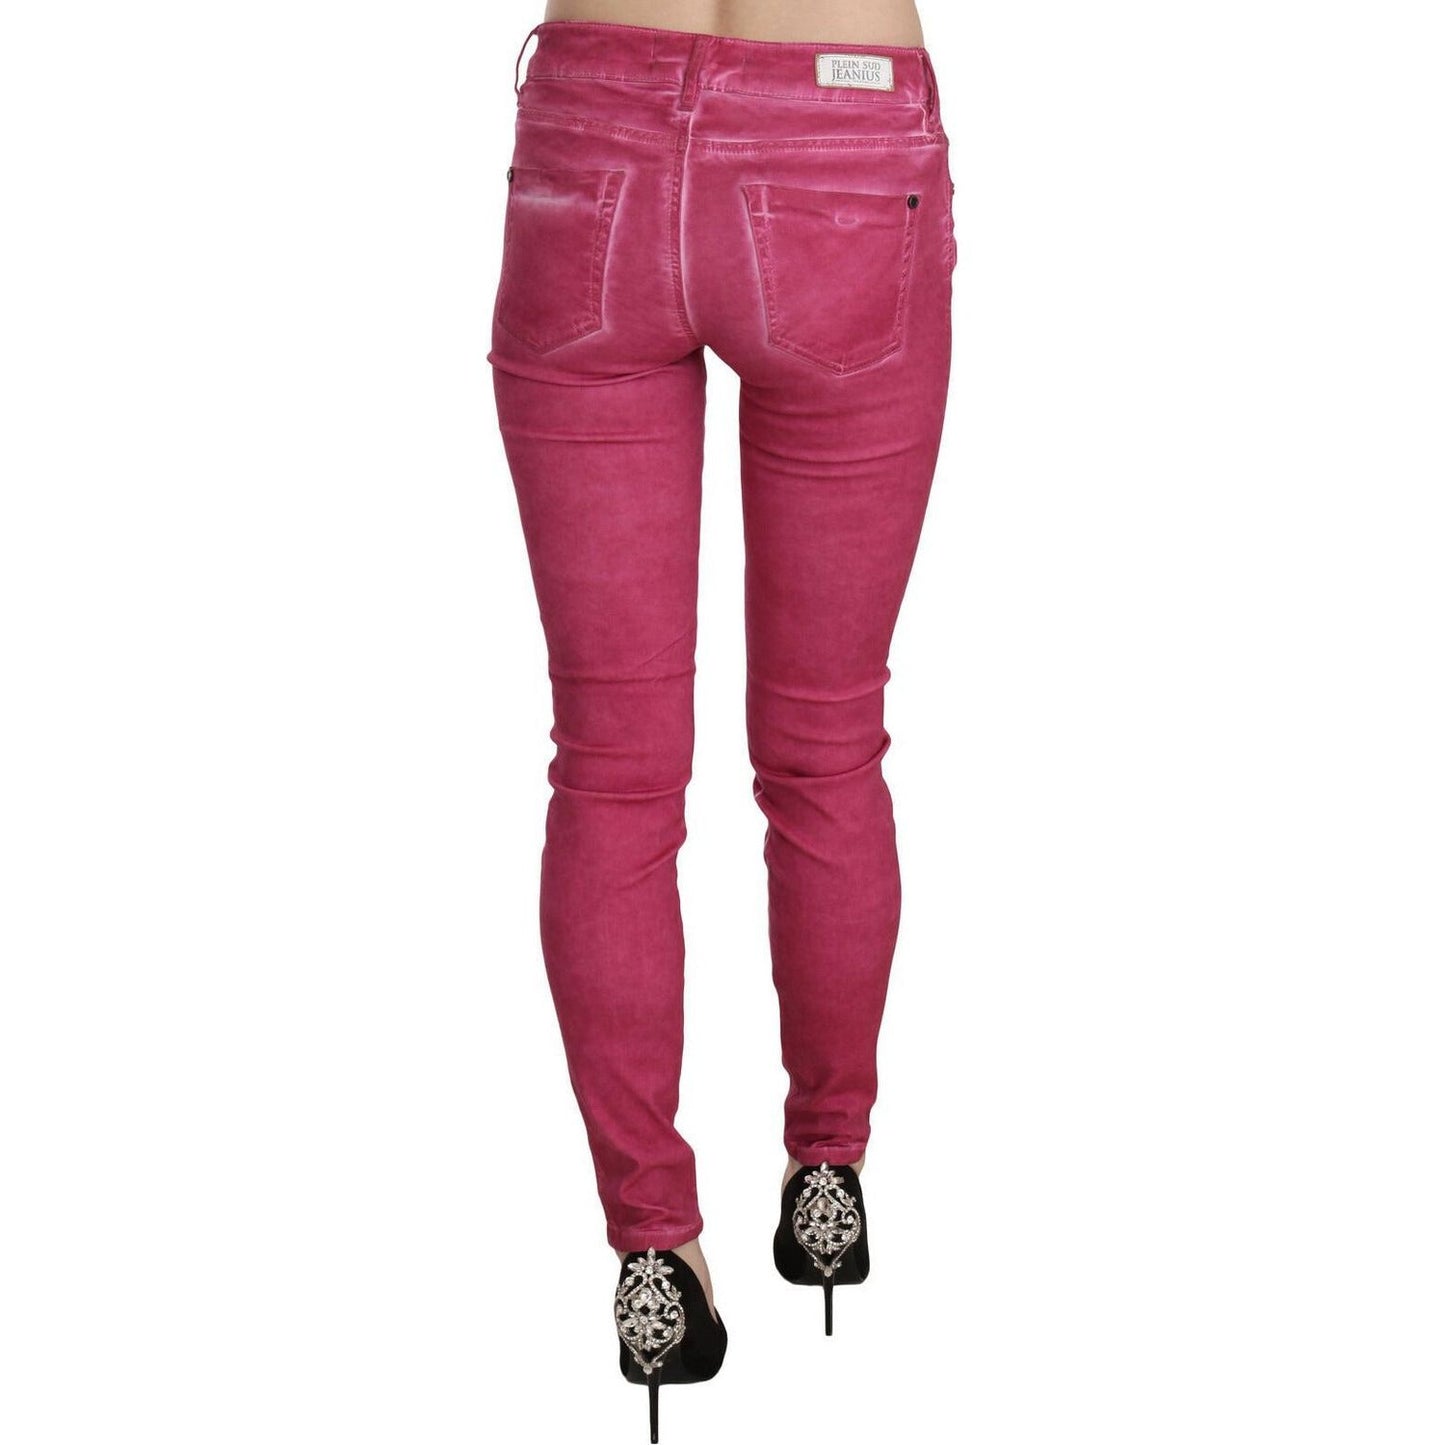 Dolce & Gabbana Chic Pink Mid Waist Skinny Pants pink-velvet-mid-waist-skinny-trouser-pants Jeans & Pants s-l1600-2022-09-20T114139.622-2136a797-f41.jpg